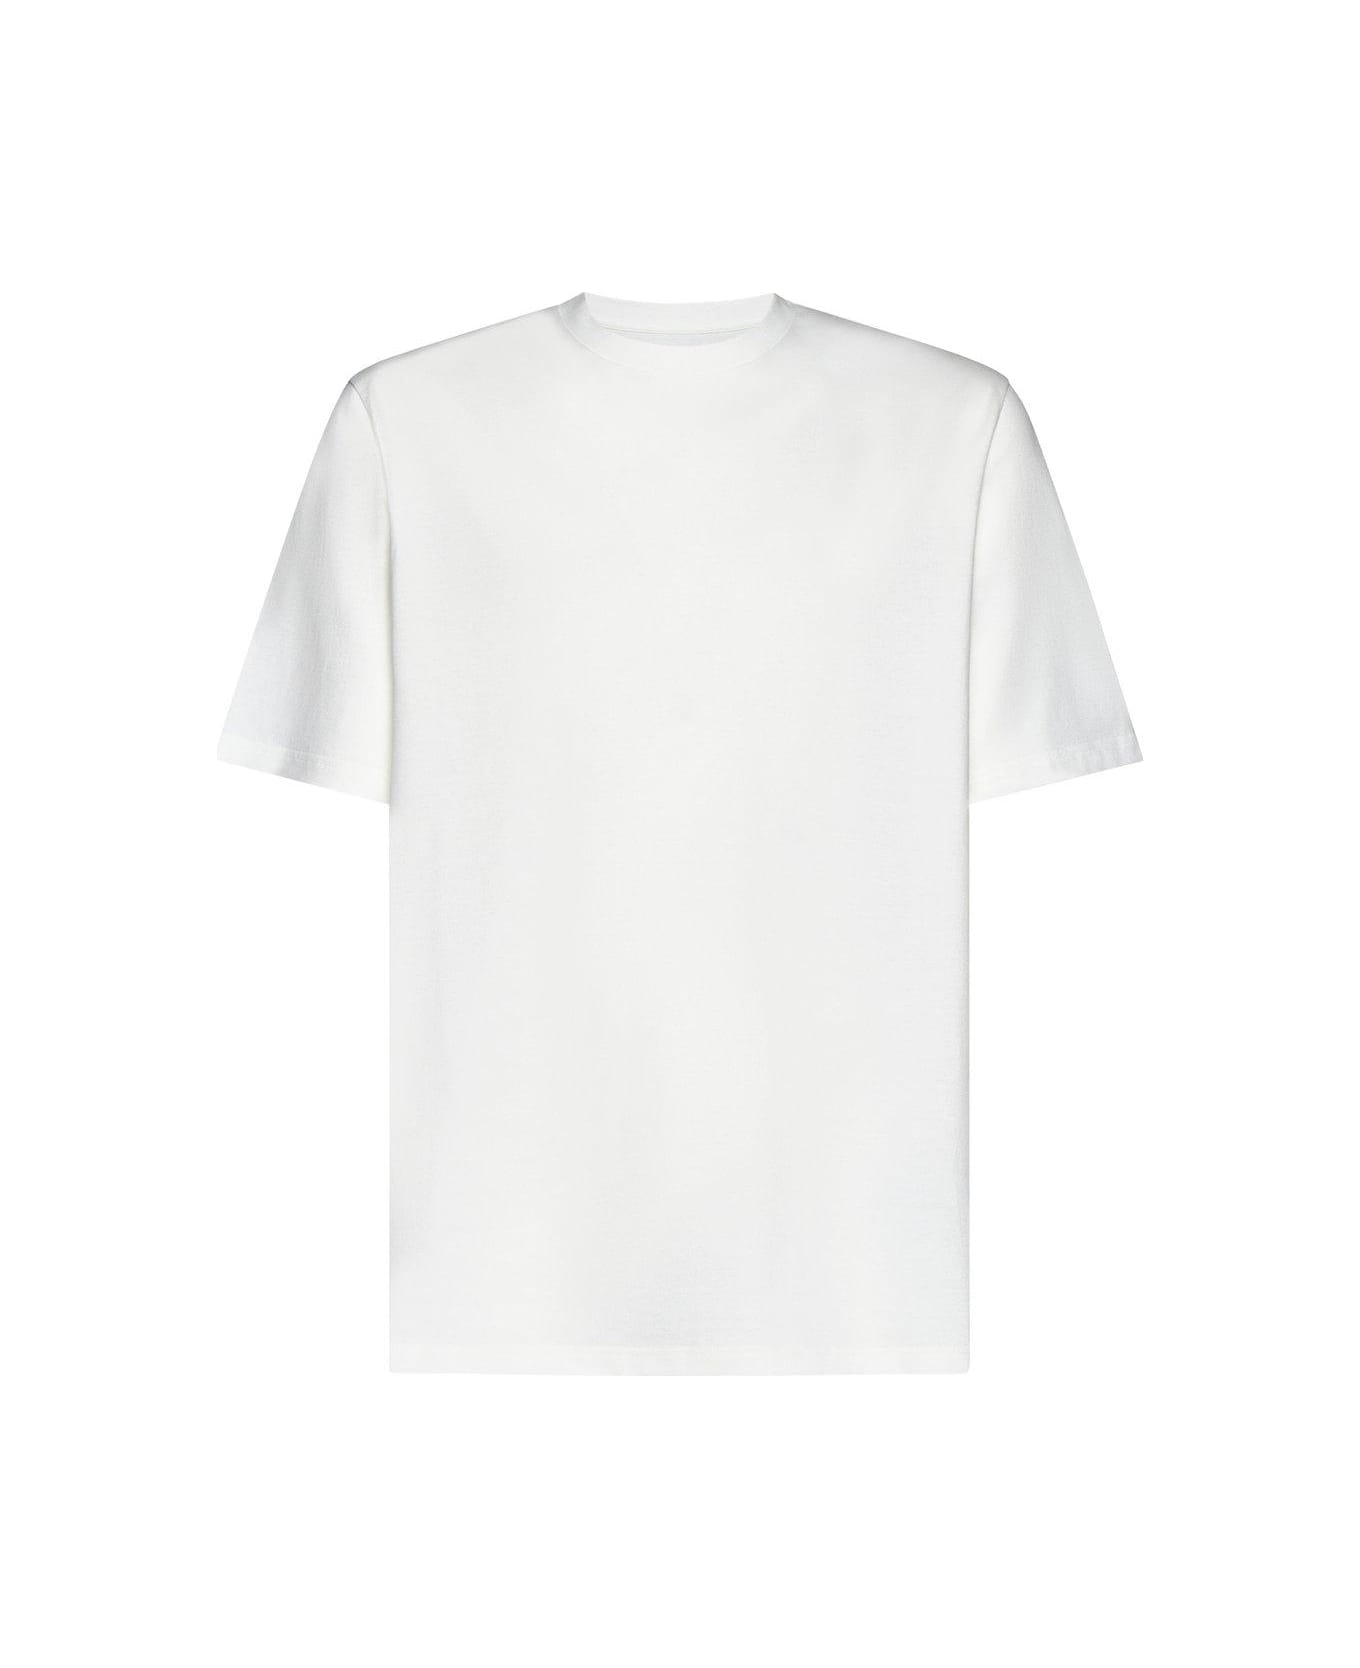 Jil Sander + Logo Printed Crewneck T-shirt - Panna